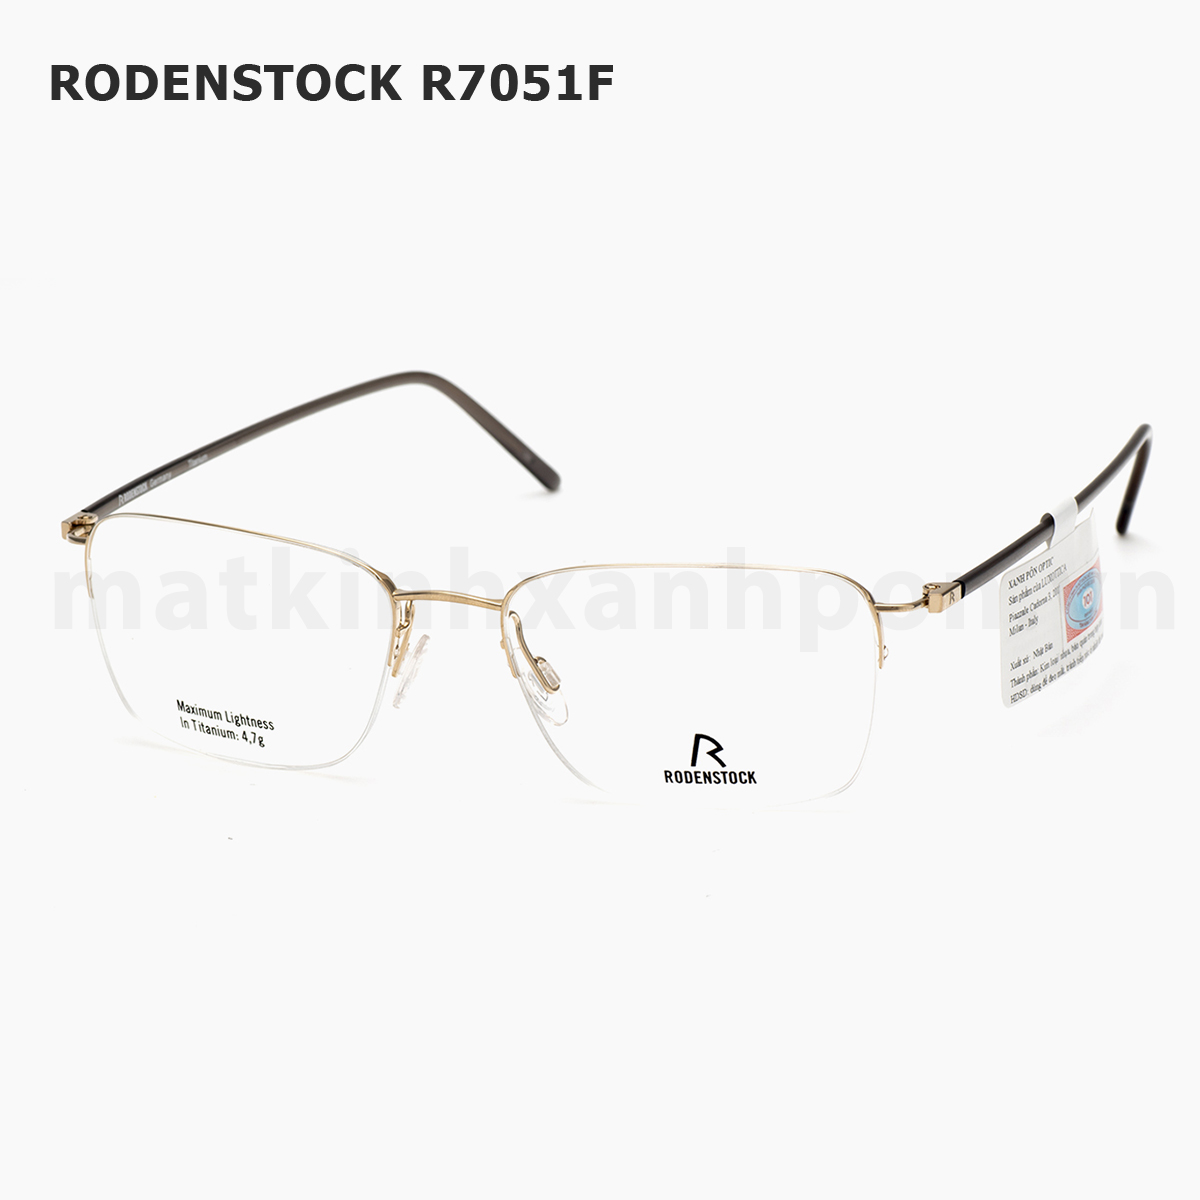 Rodenstock R7051F